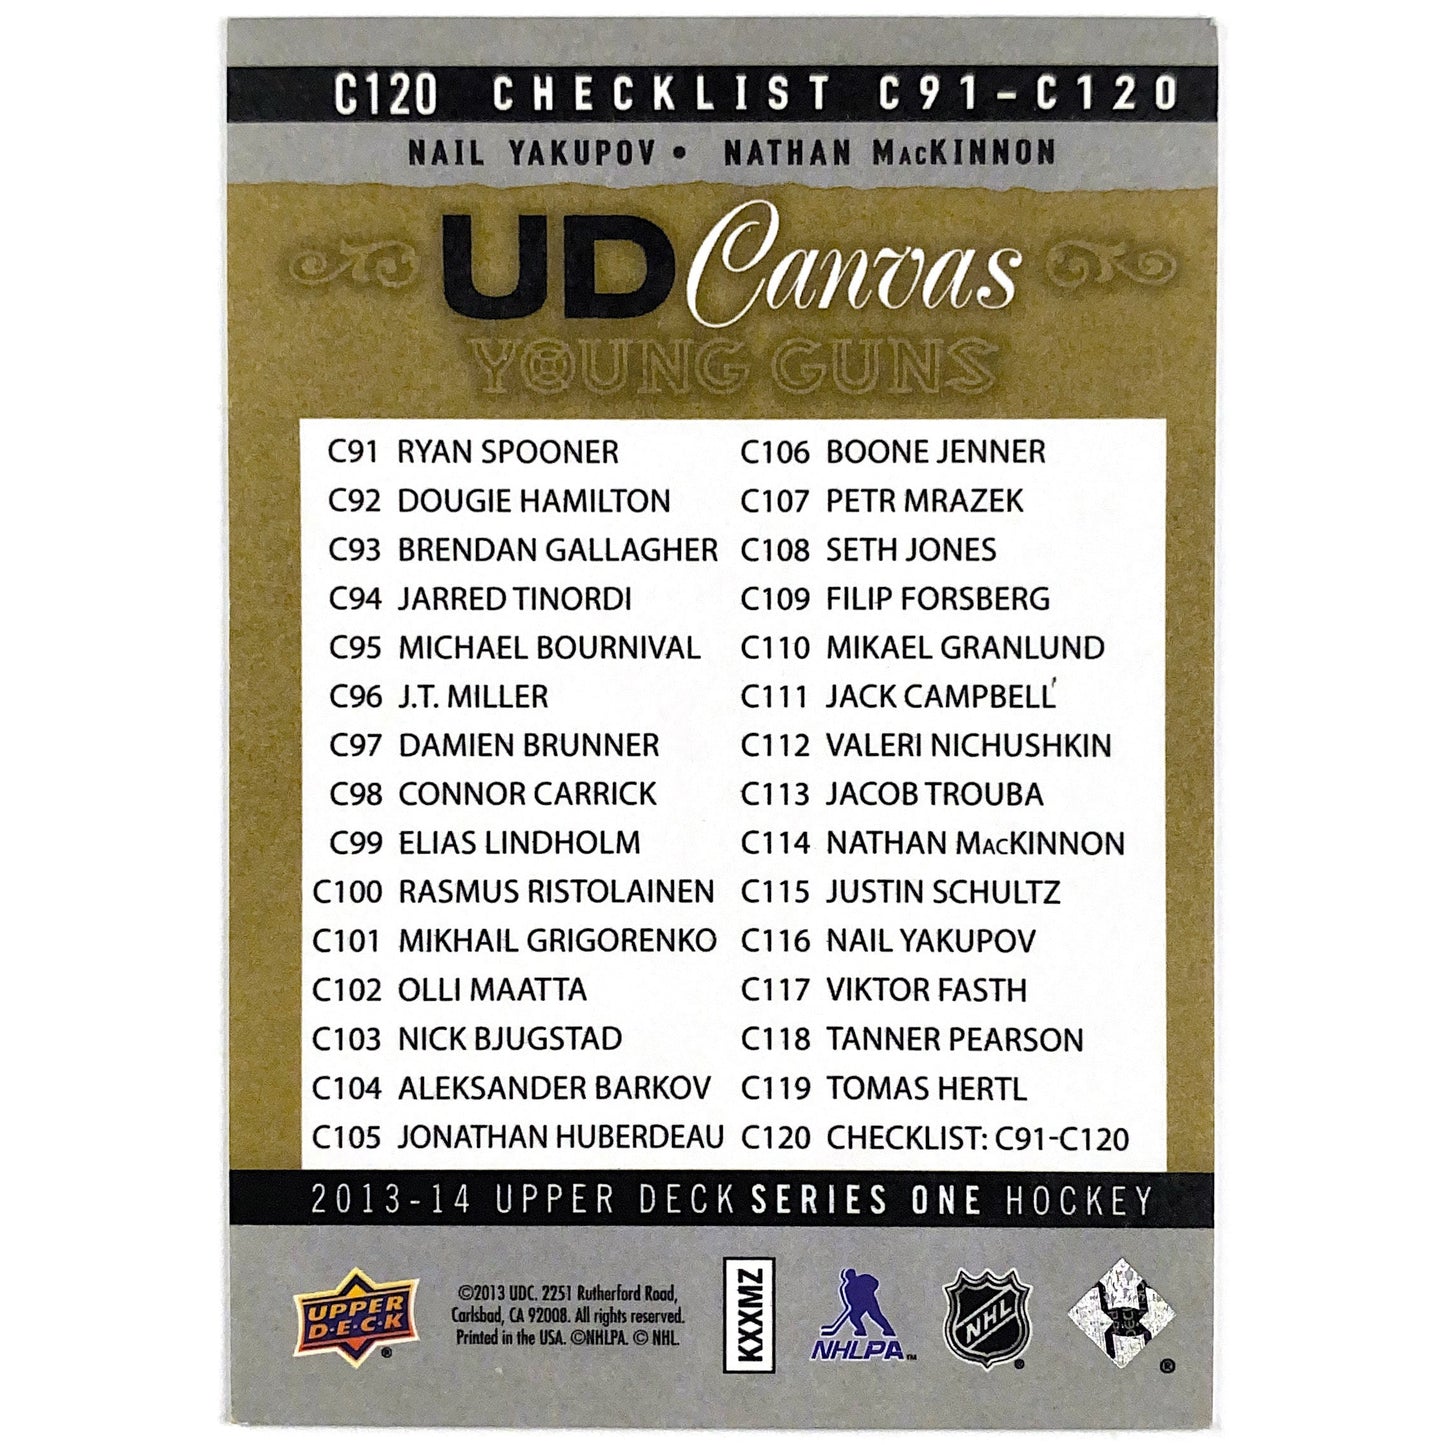 2013-14 Upper Deck Series 1 MacKinnon / Yakupov Young Guns Canvas Checklist